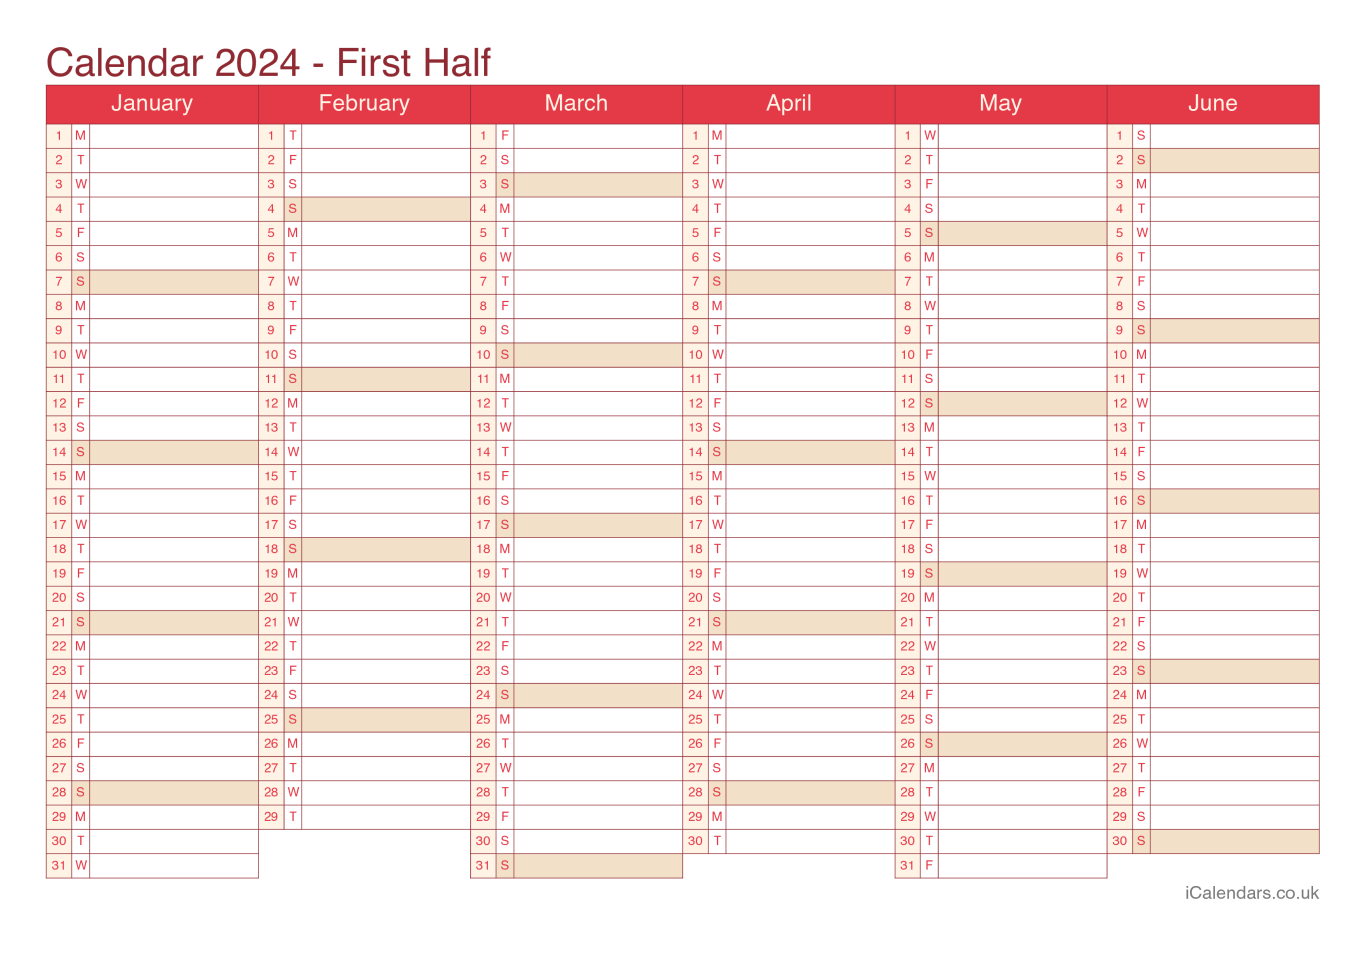 Half year calendar 2024 - Cherry